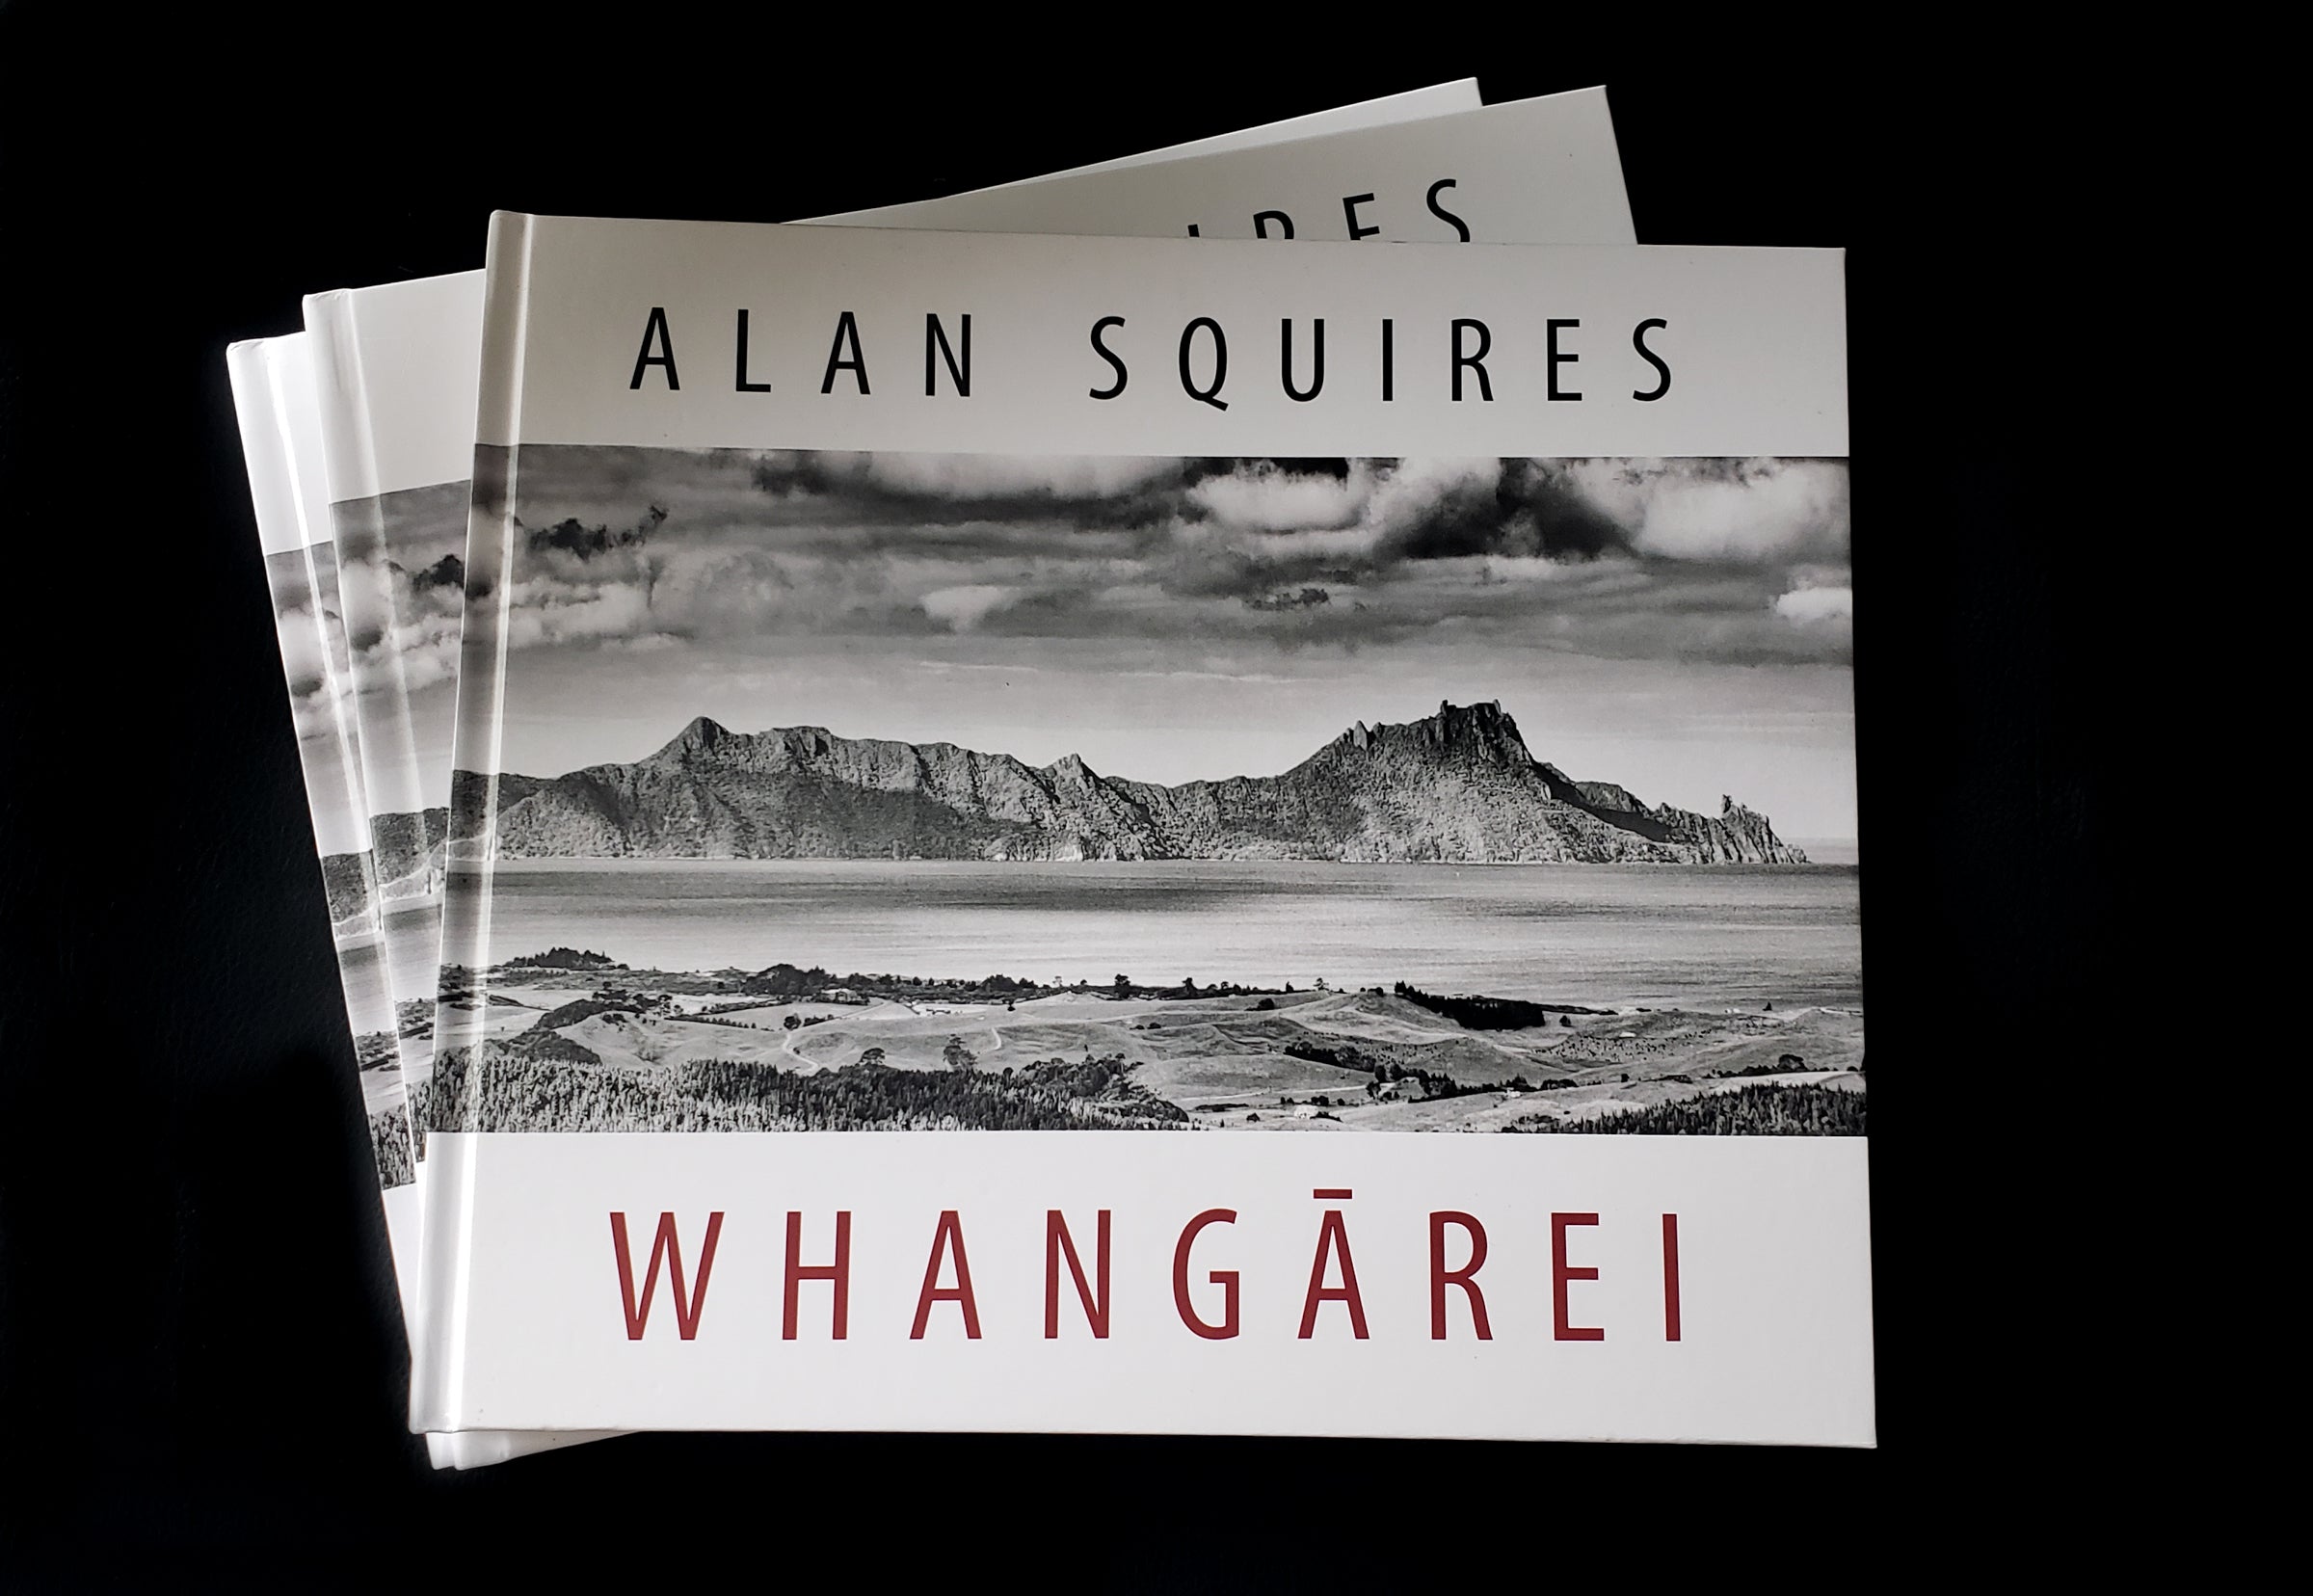 Whangarei - A landscape photography journey